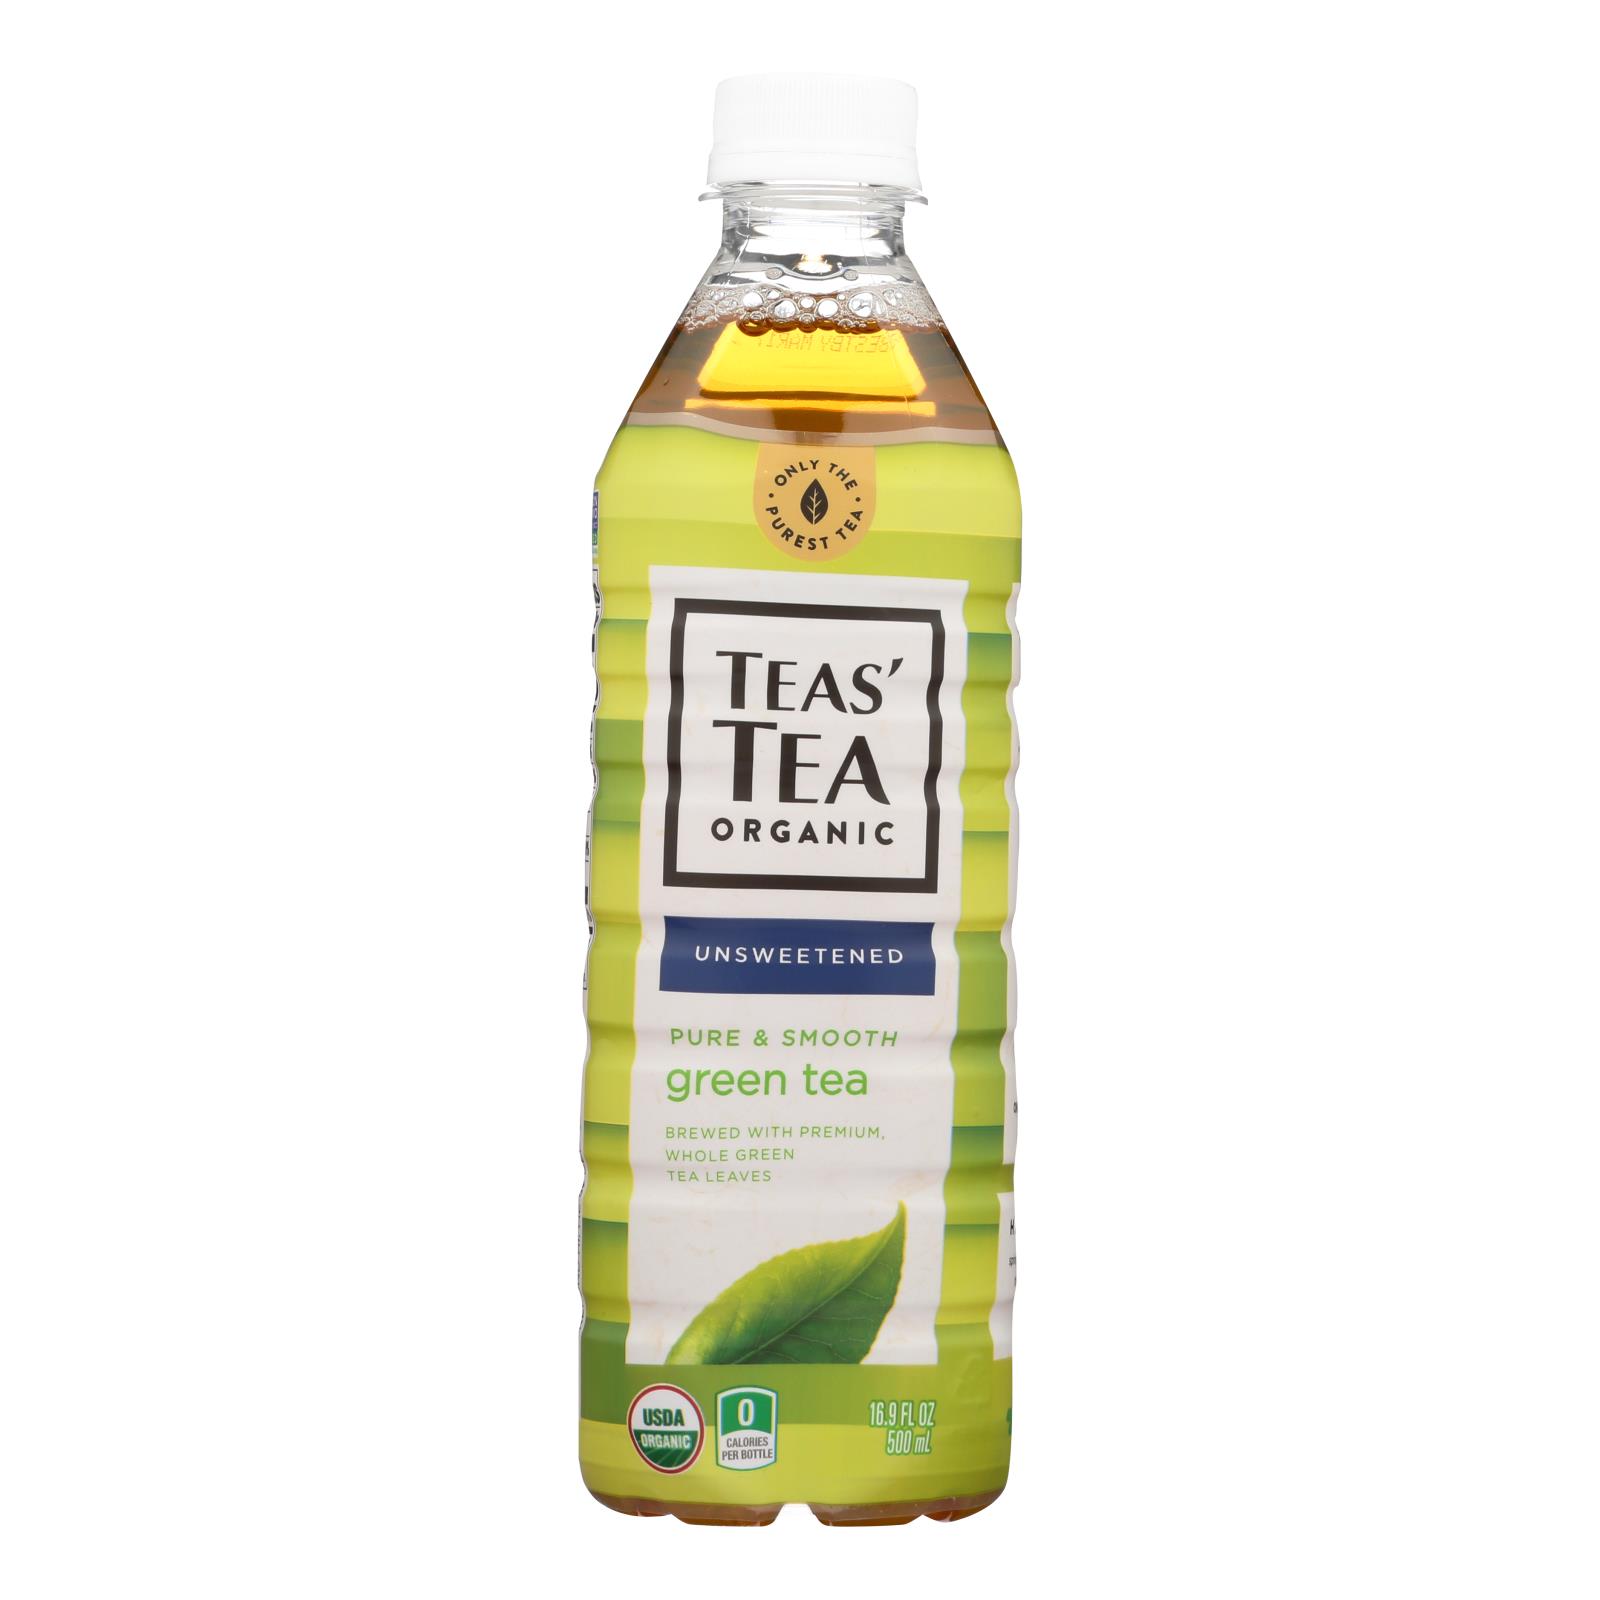 Itoen Organic Tea - Pure Green Bottle - 12개 묶음상품 - 16.9 fl oz